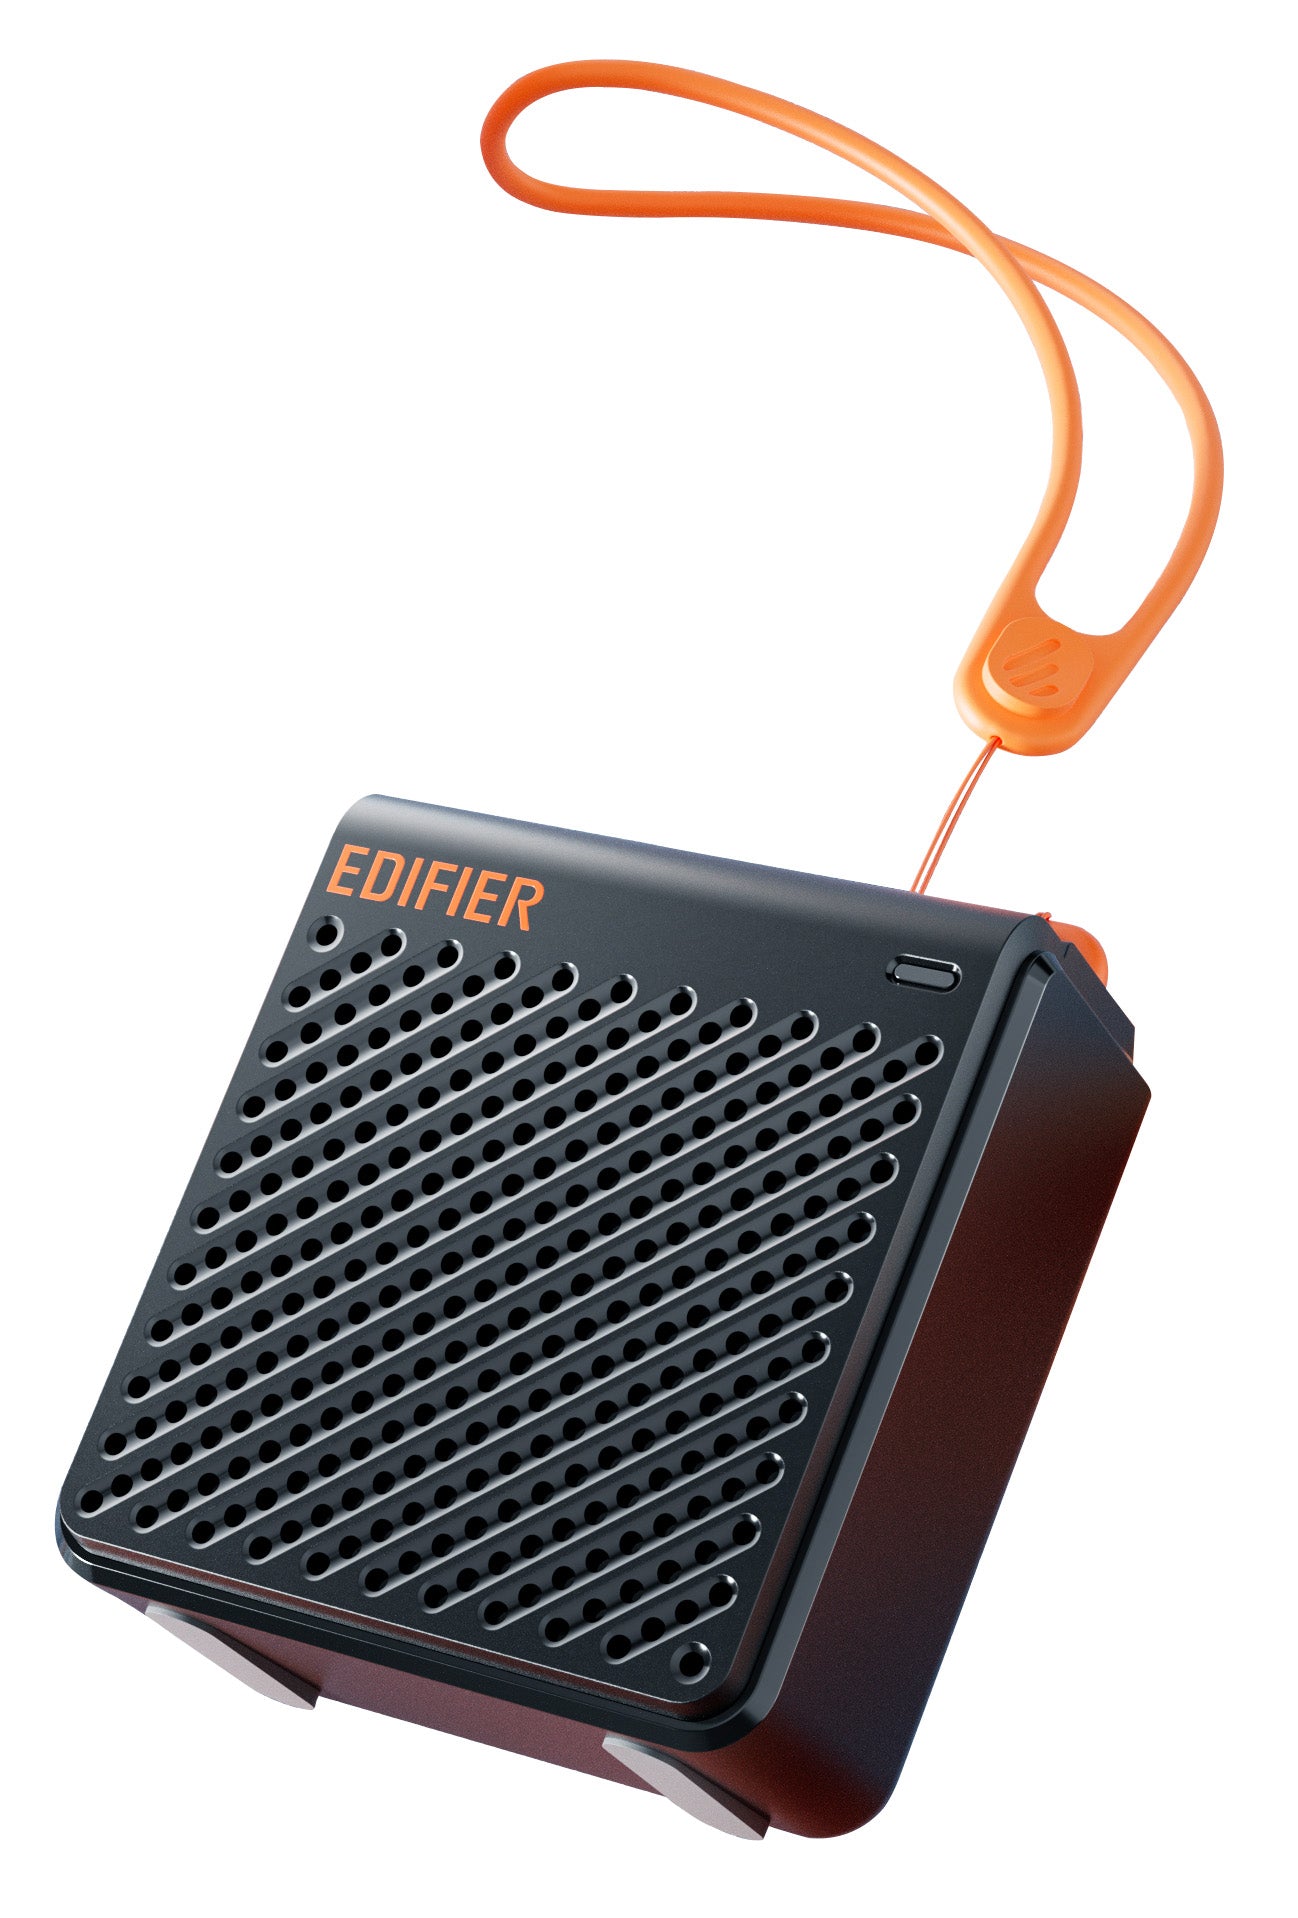 Edifier MP85 Portable Bluetooth Speaker - Black